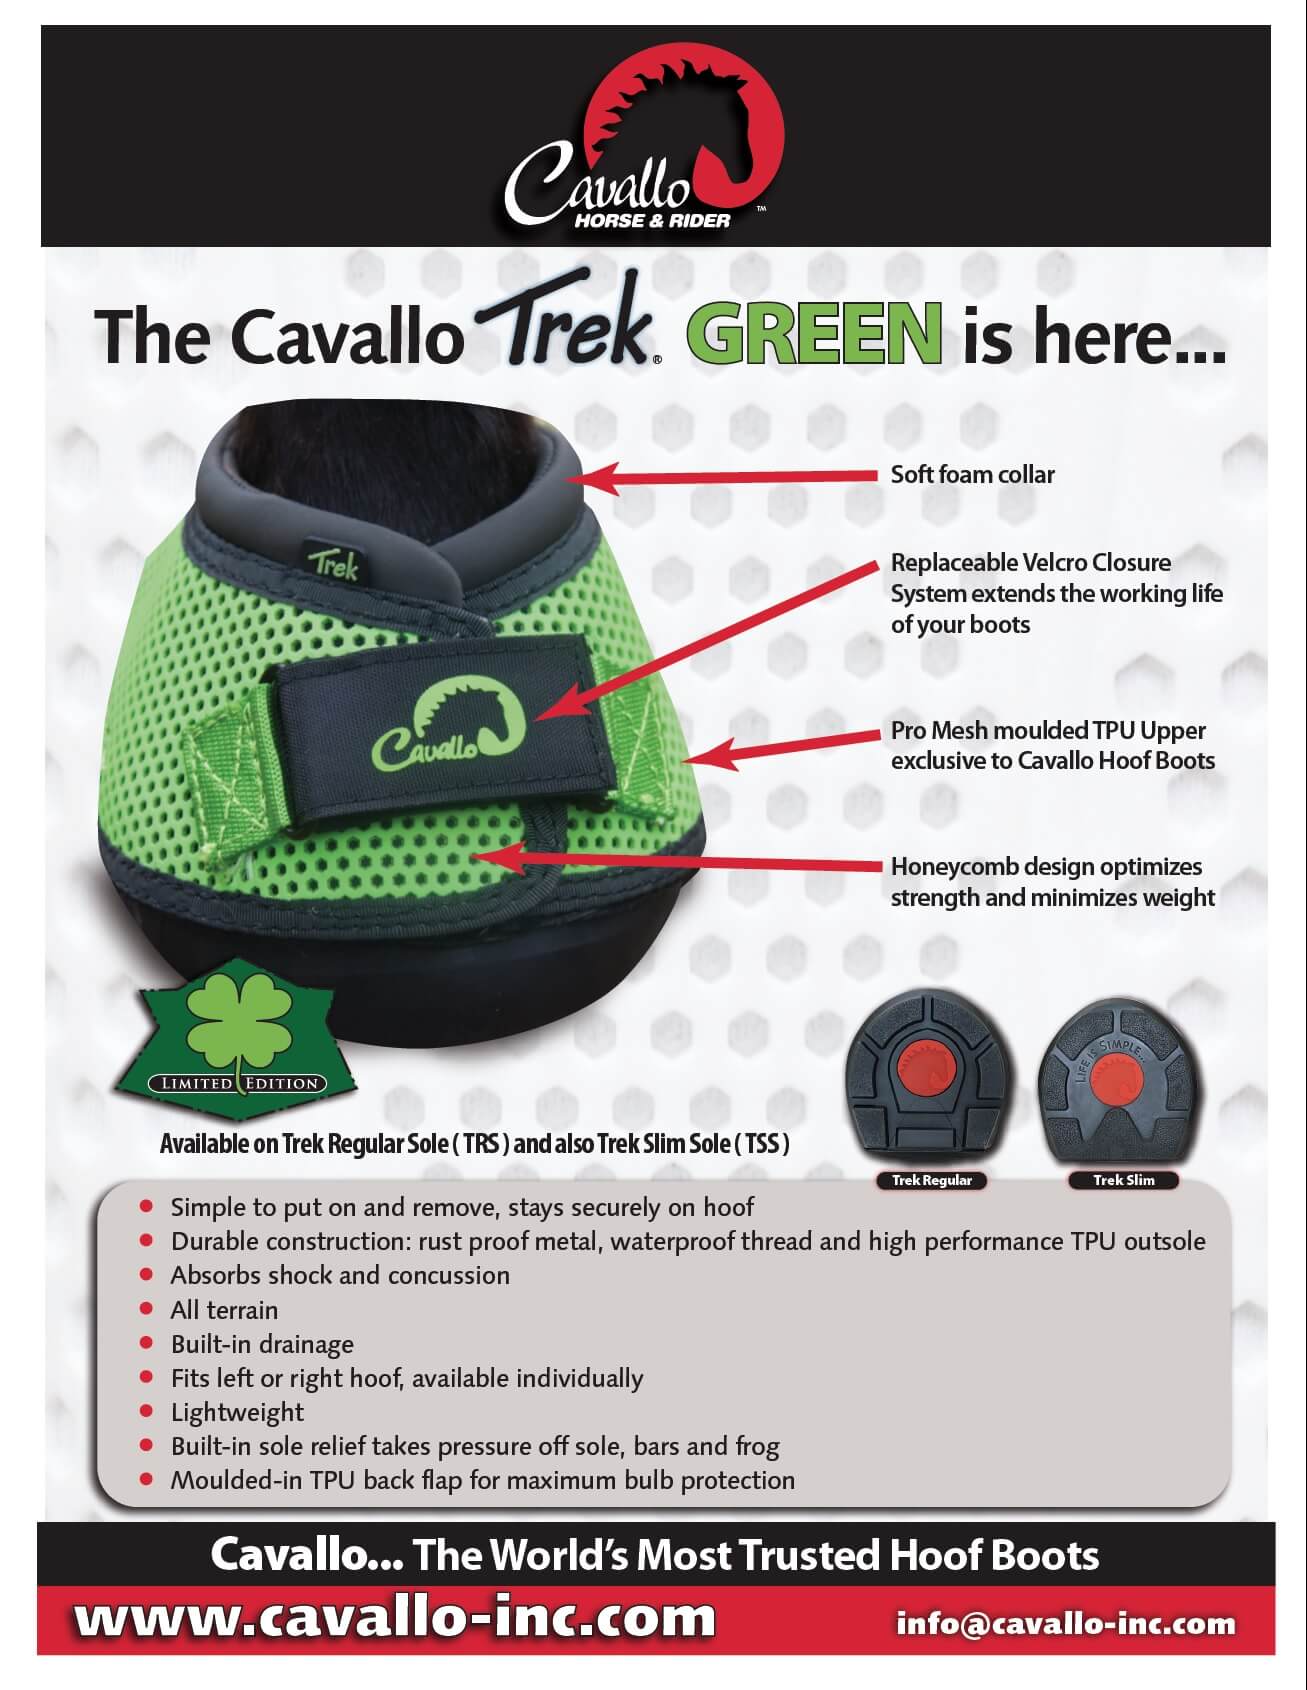 The Cavallo Trek GREEN is Here...